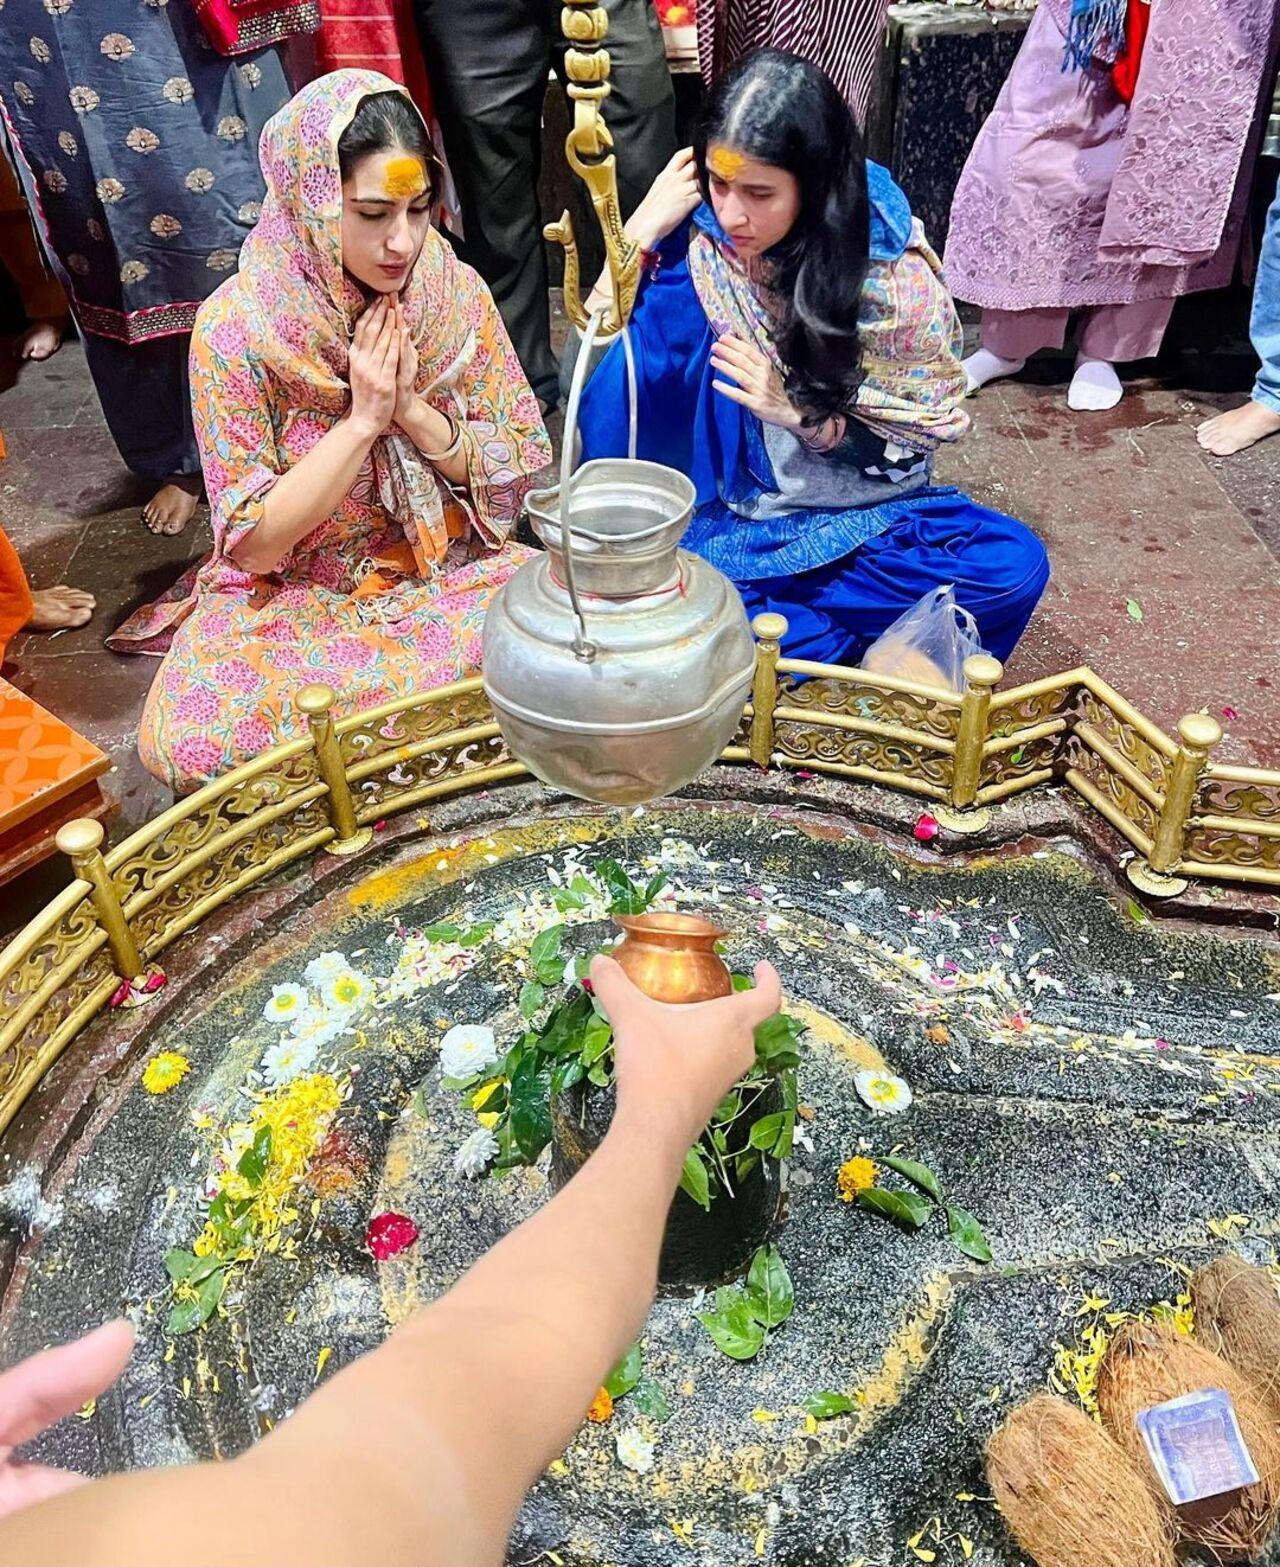 Sara Ali Khan recently visited the sacred boundaries of the Grineshwar Maha Jyotirlinga in Verul, Maharashtra accompanied by a friend